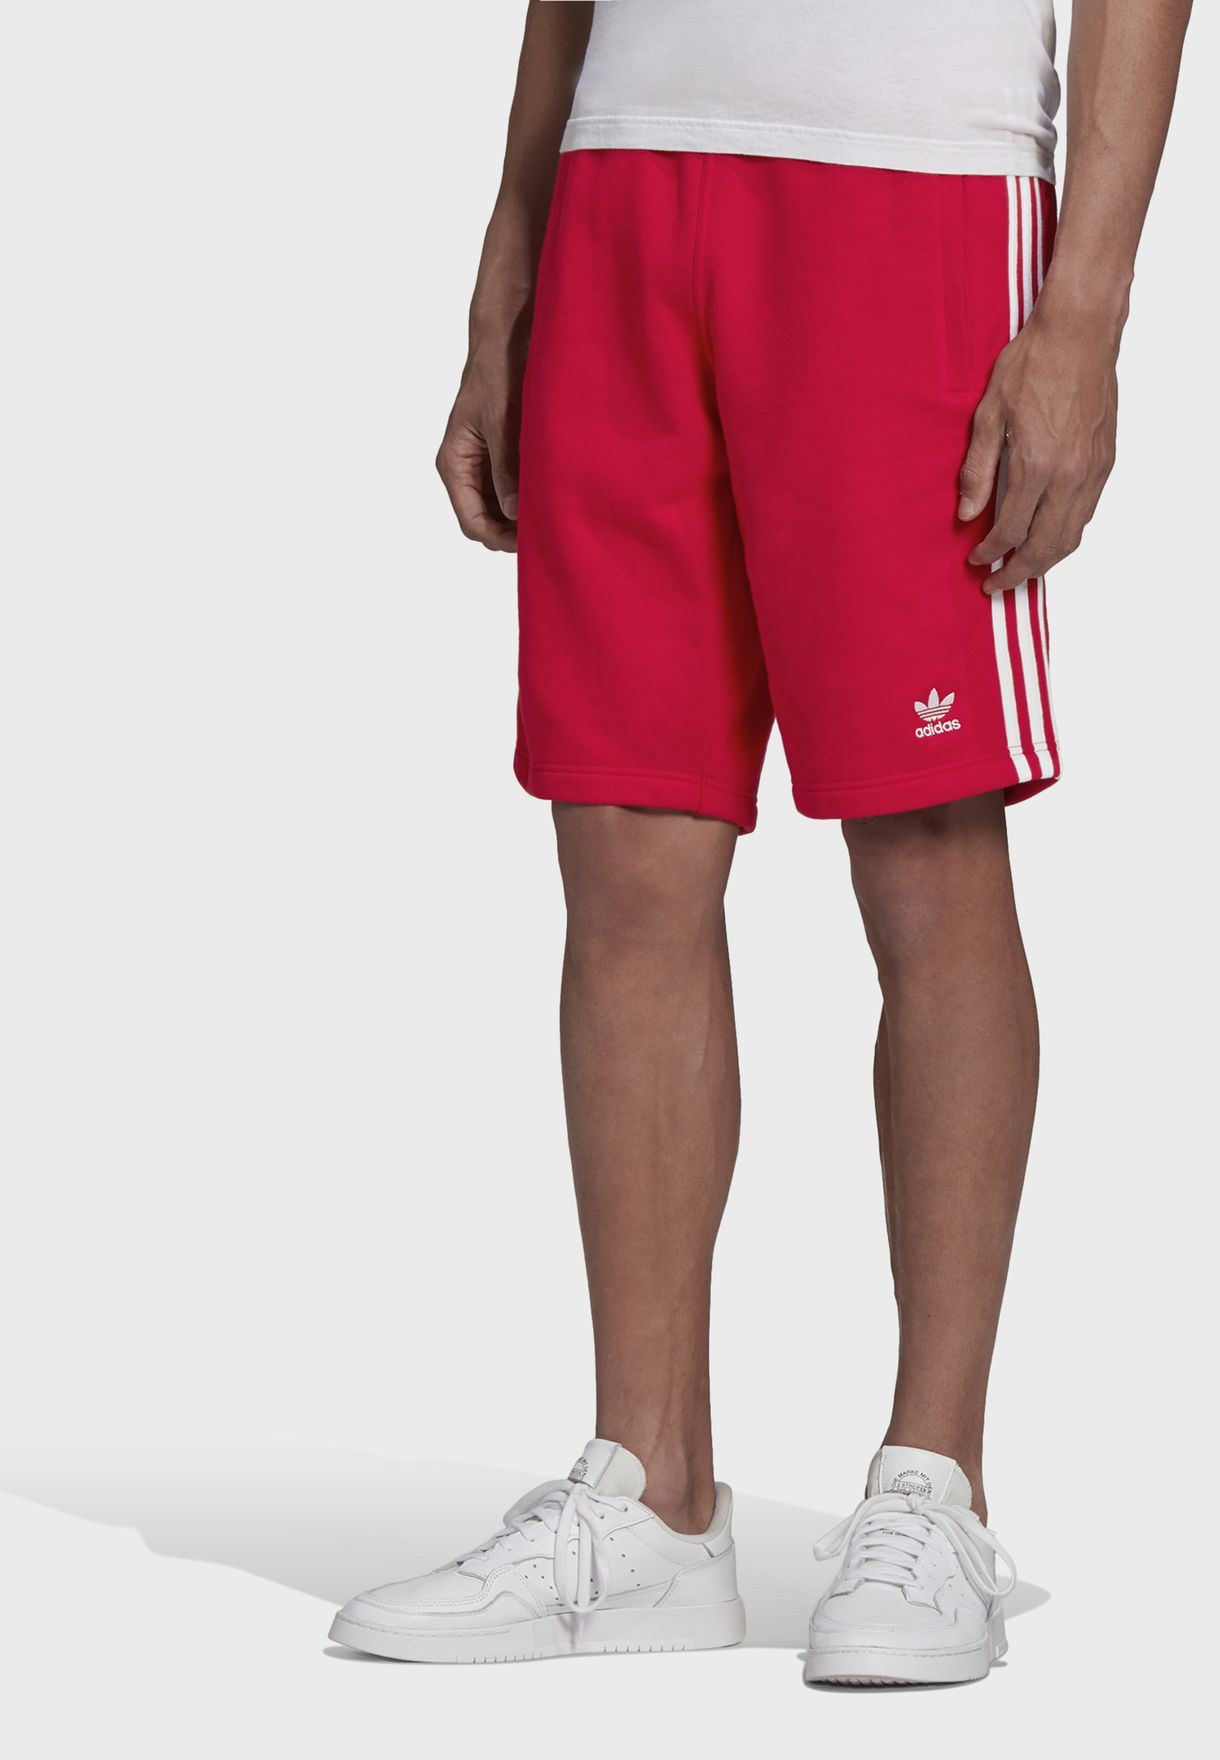 adidas originals red shorts